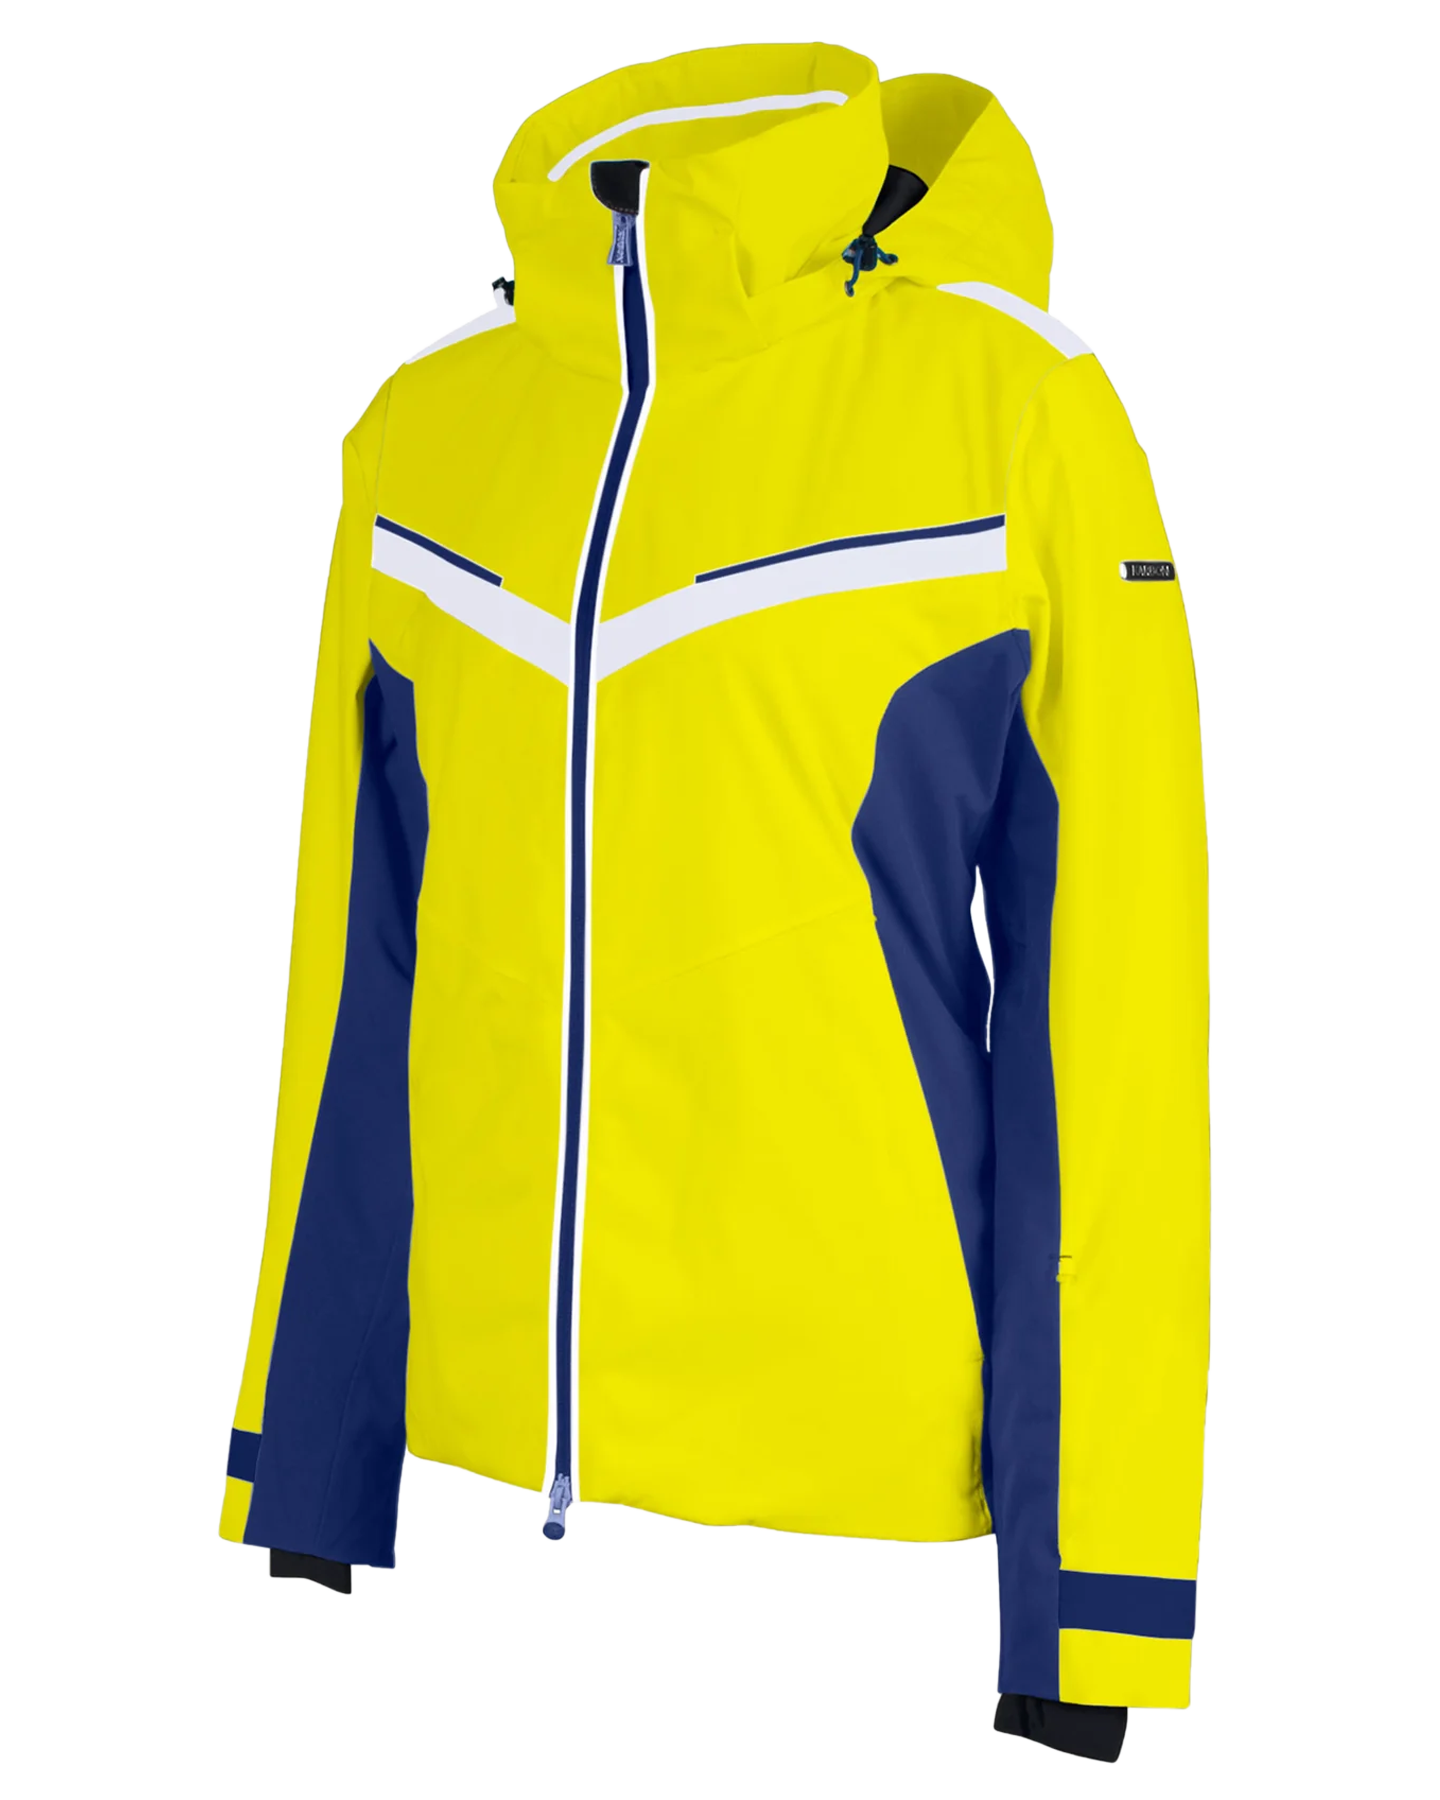 Karbon Solitare Diamond Tech Women's Snow Jacket - Lemon Women's Snow Jackets - SnowSkiersWarehouse